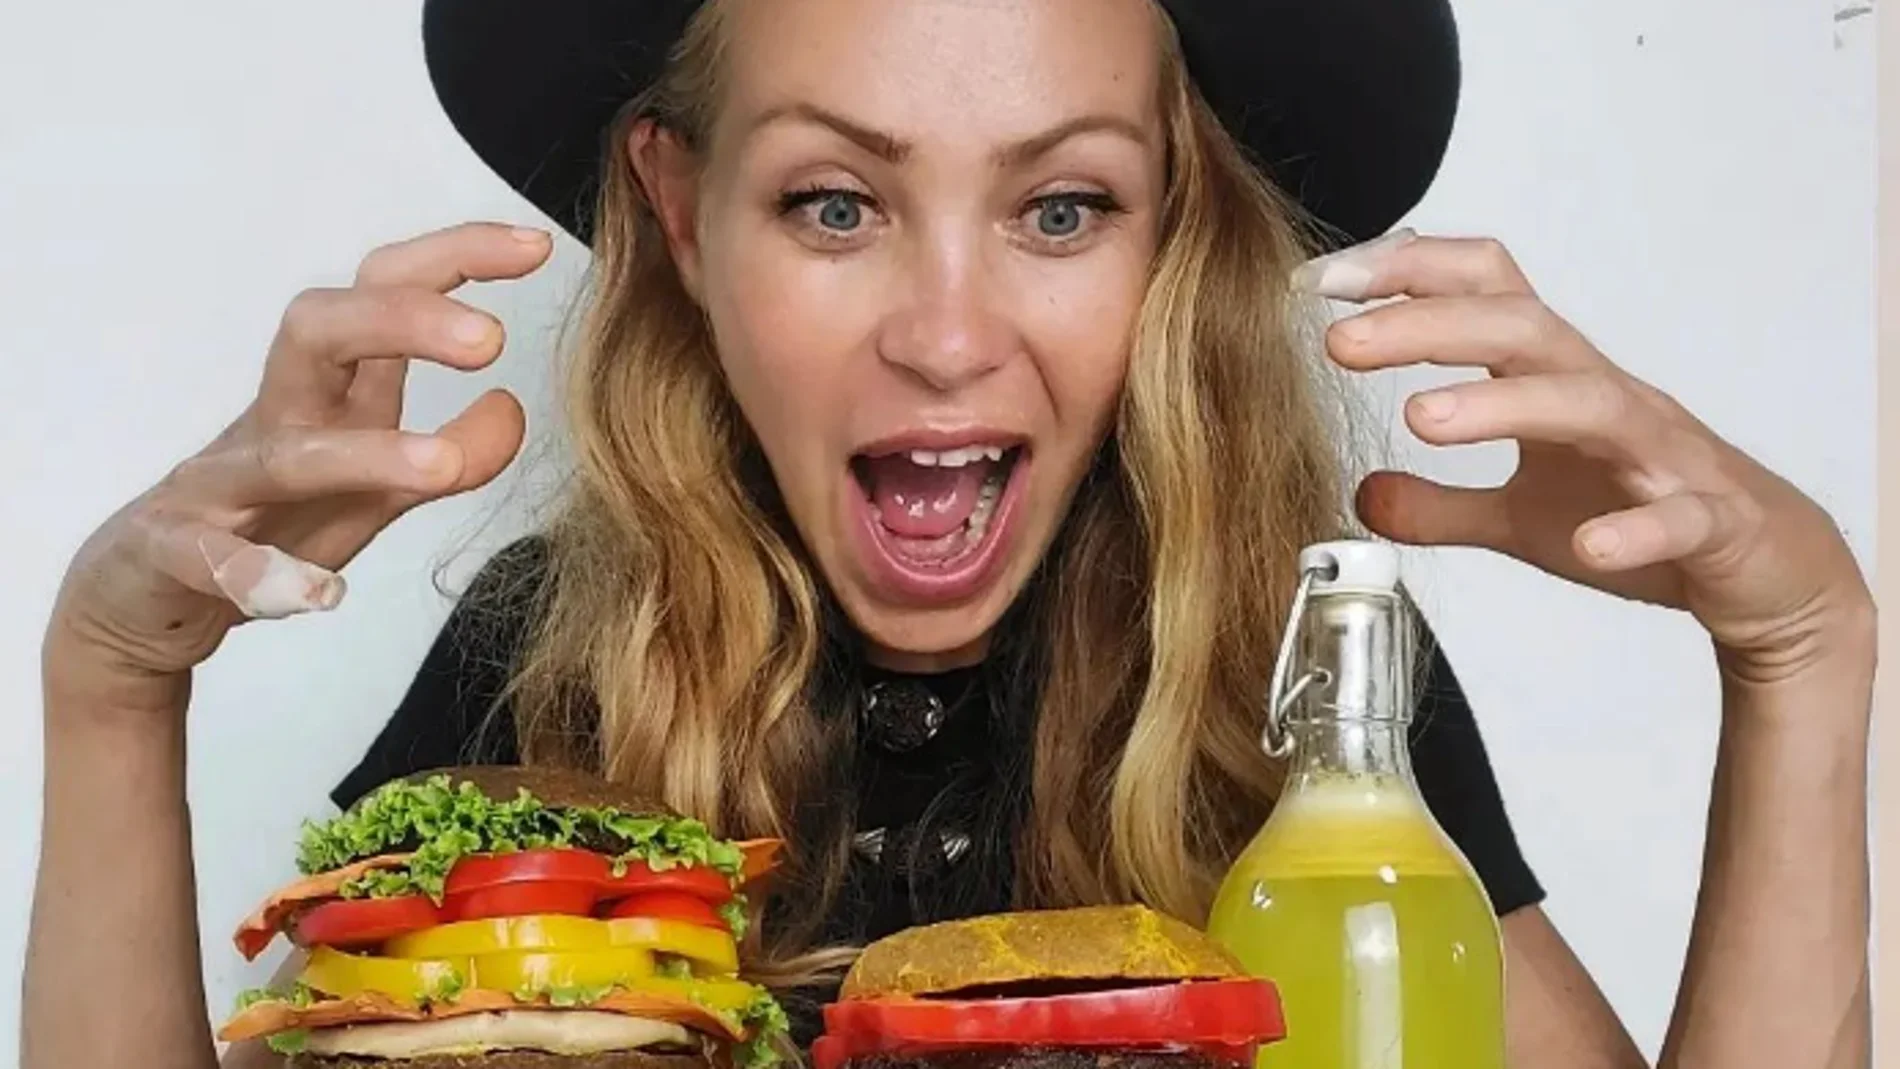 Fallece influencer vegana Zhanna D'Art por desnutrición tras seguir una extrema dieta de frutas